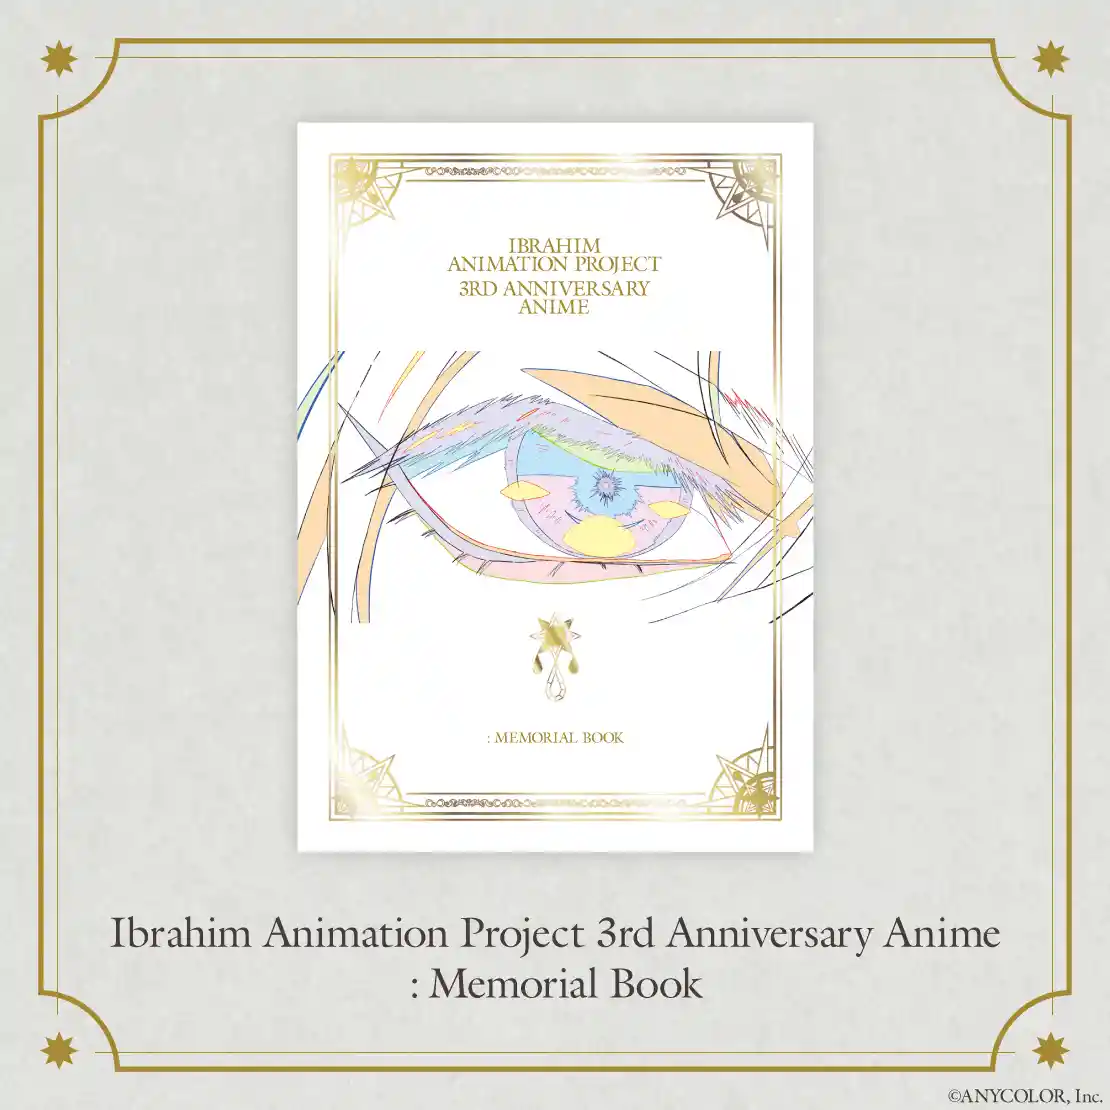 Ibrahim Animation Project 3rd Anniversary Anime : Memorial Book